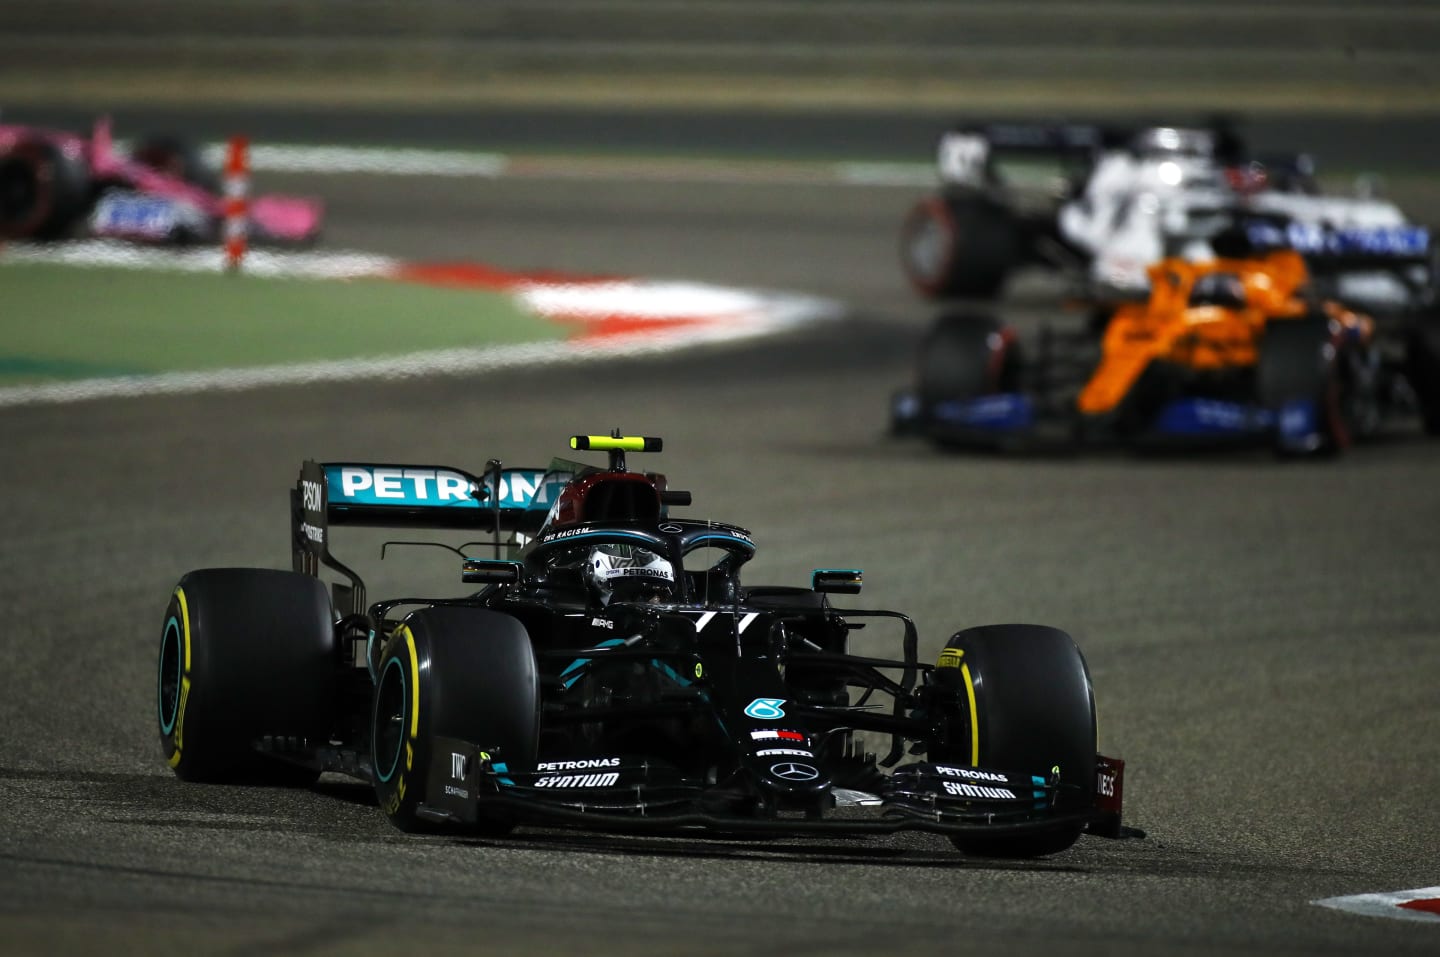 BAHRAIN, BAHRAIN - DECEMBER 06: Valtteri Bottas of Finland driving the (77) Mercedes AMG Petronas